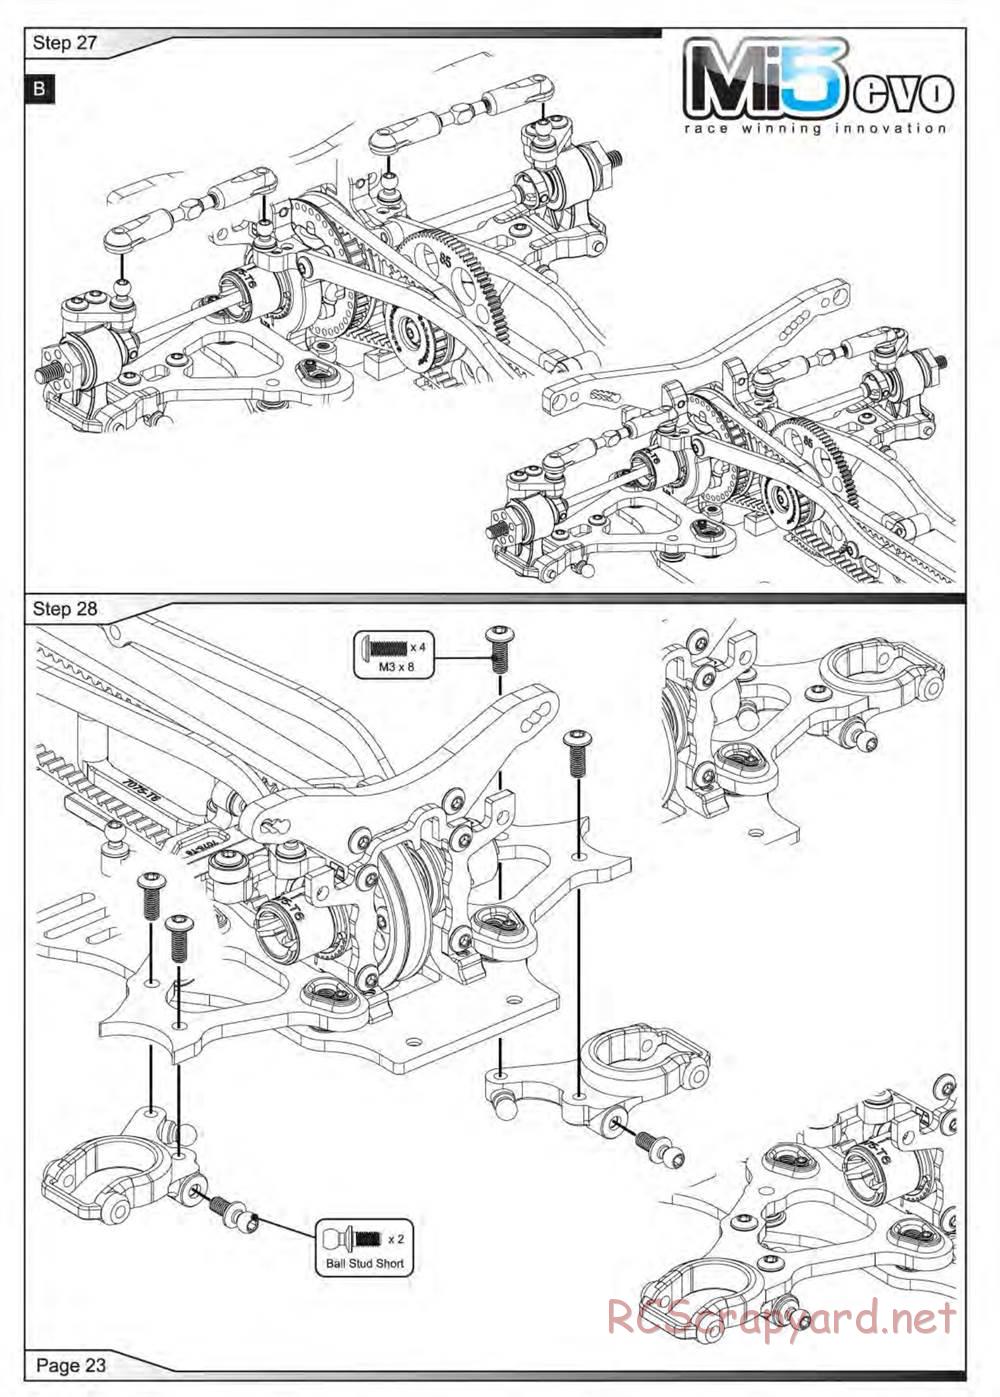 Schumacher - Mi5 Evo - Manual - Page 24